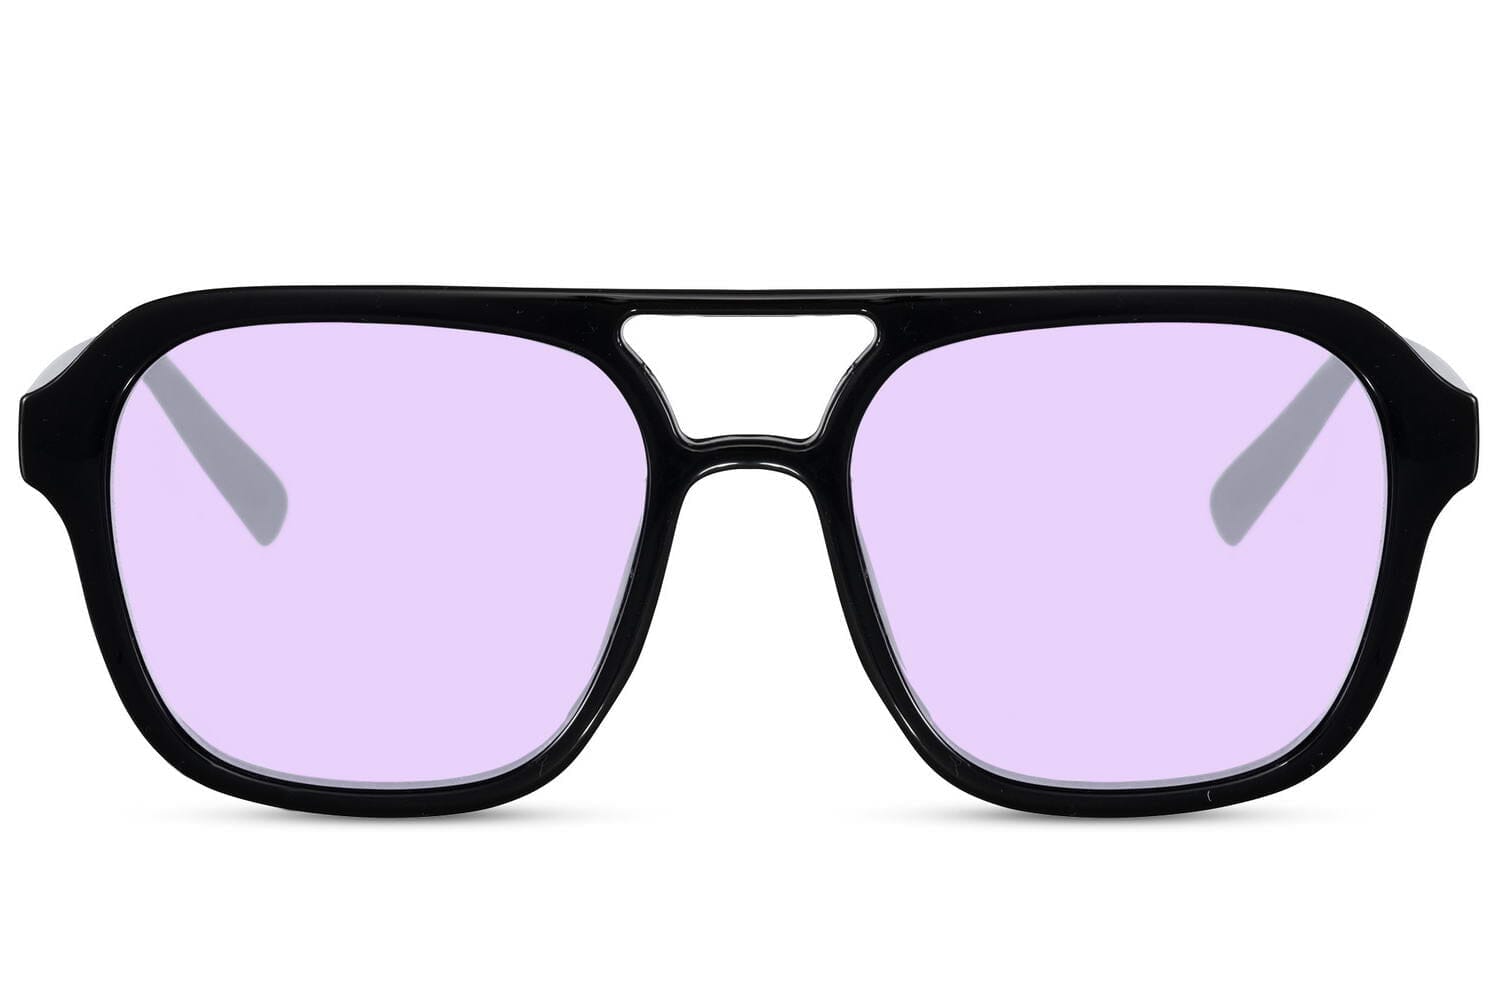 purple aviator sunglasses. Uv400 protected sunglasses. Black acetate frames.